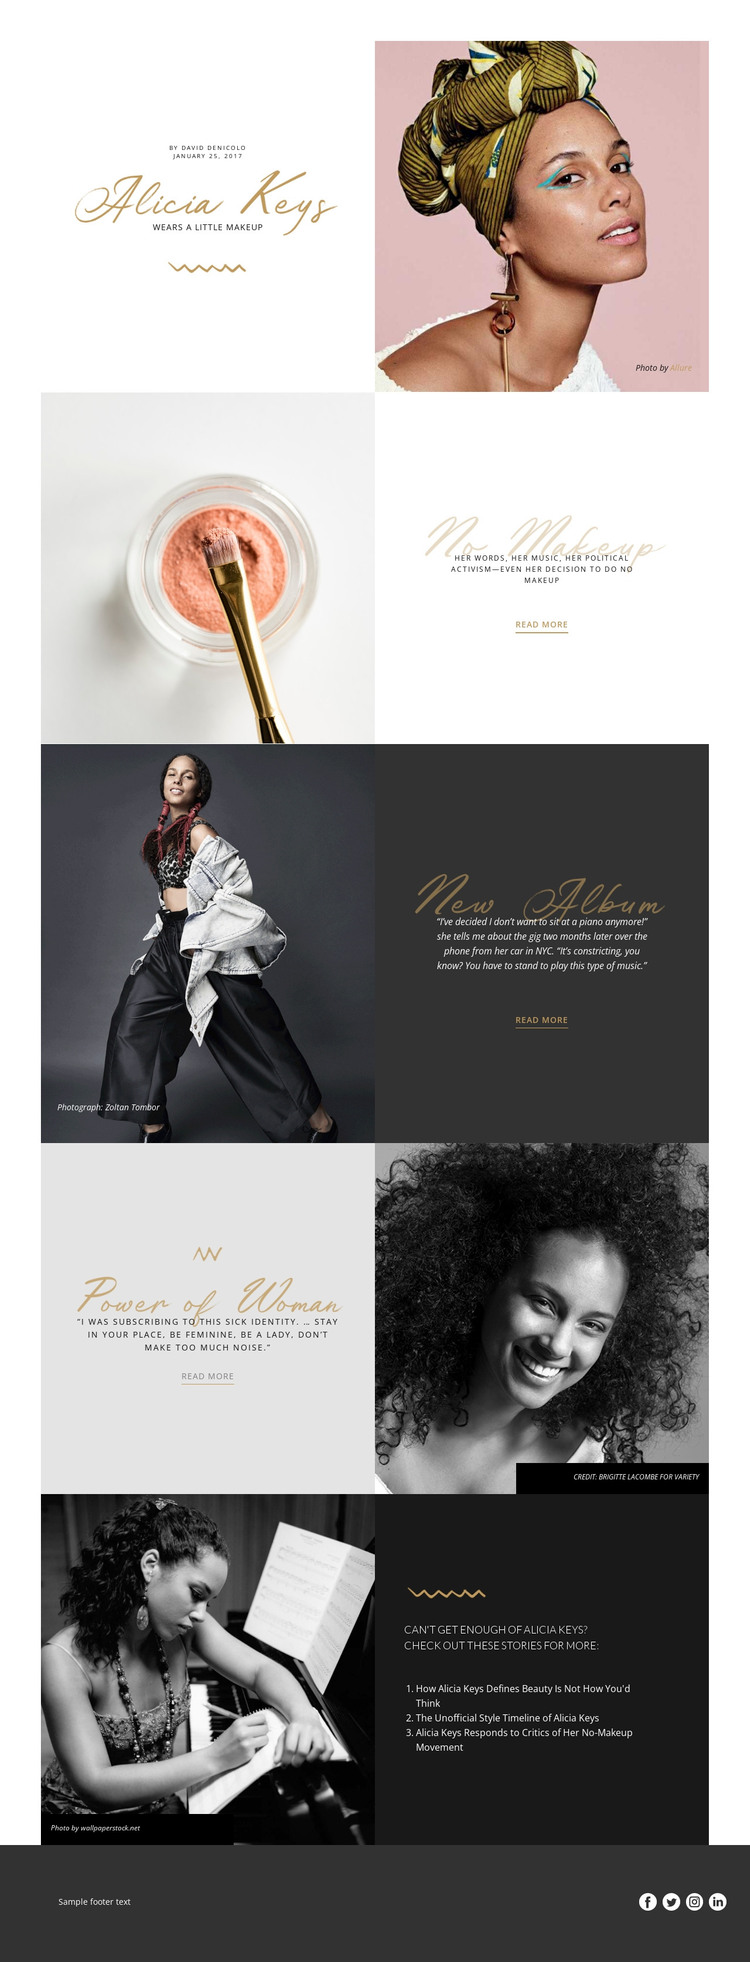 Alicia Keys Web Design